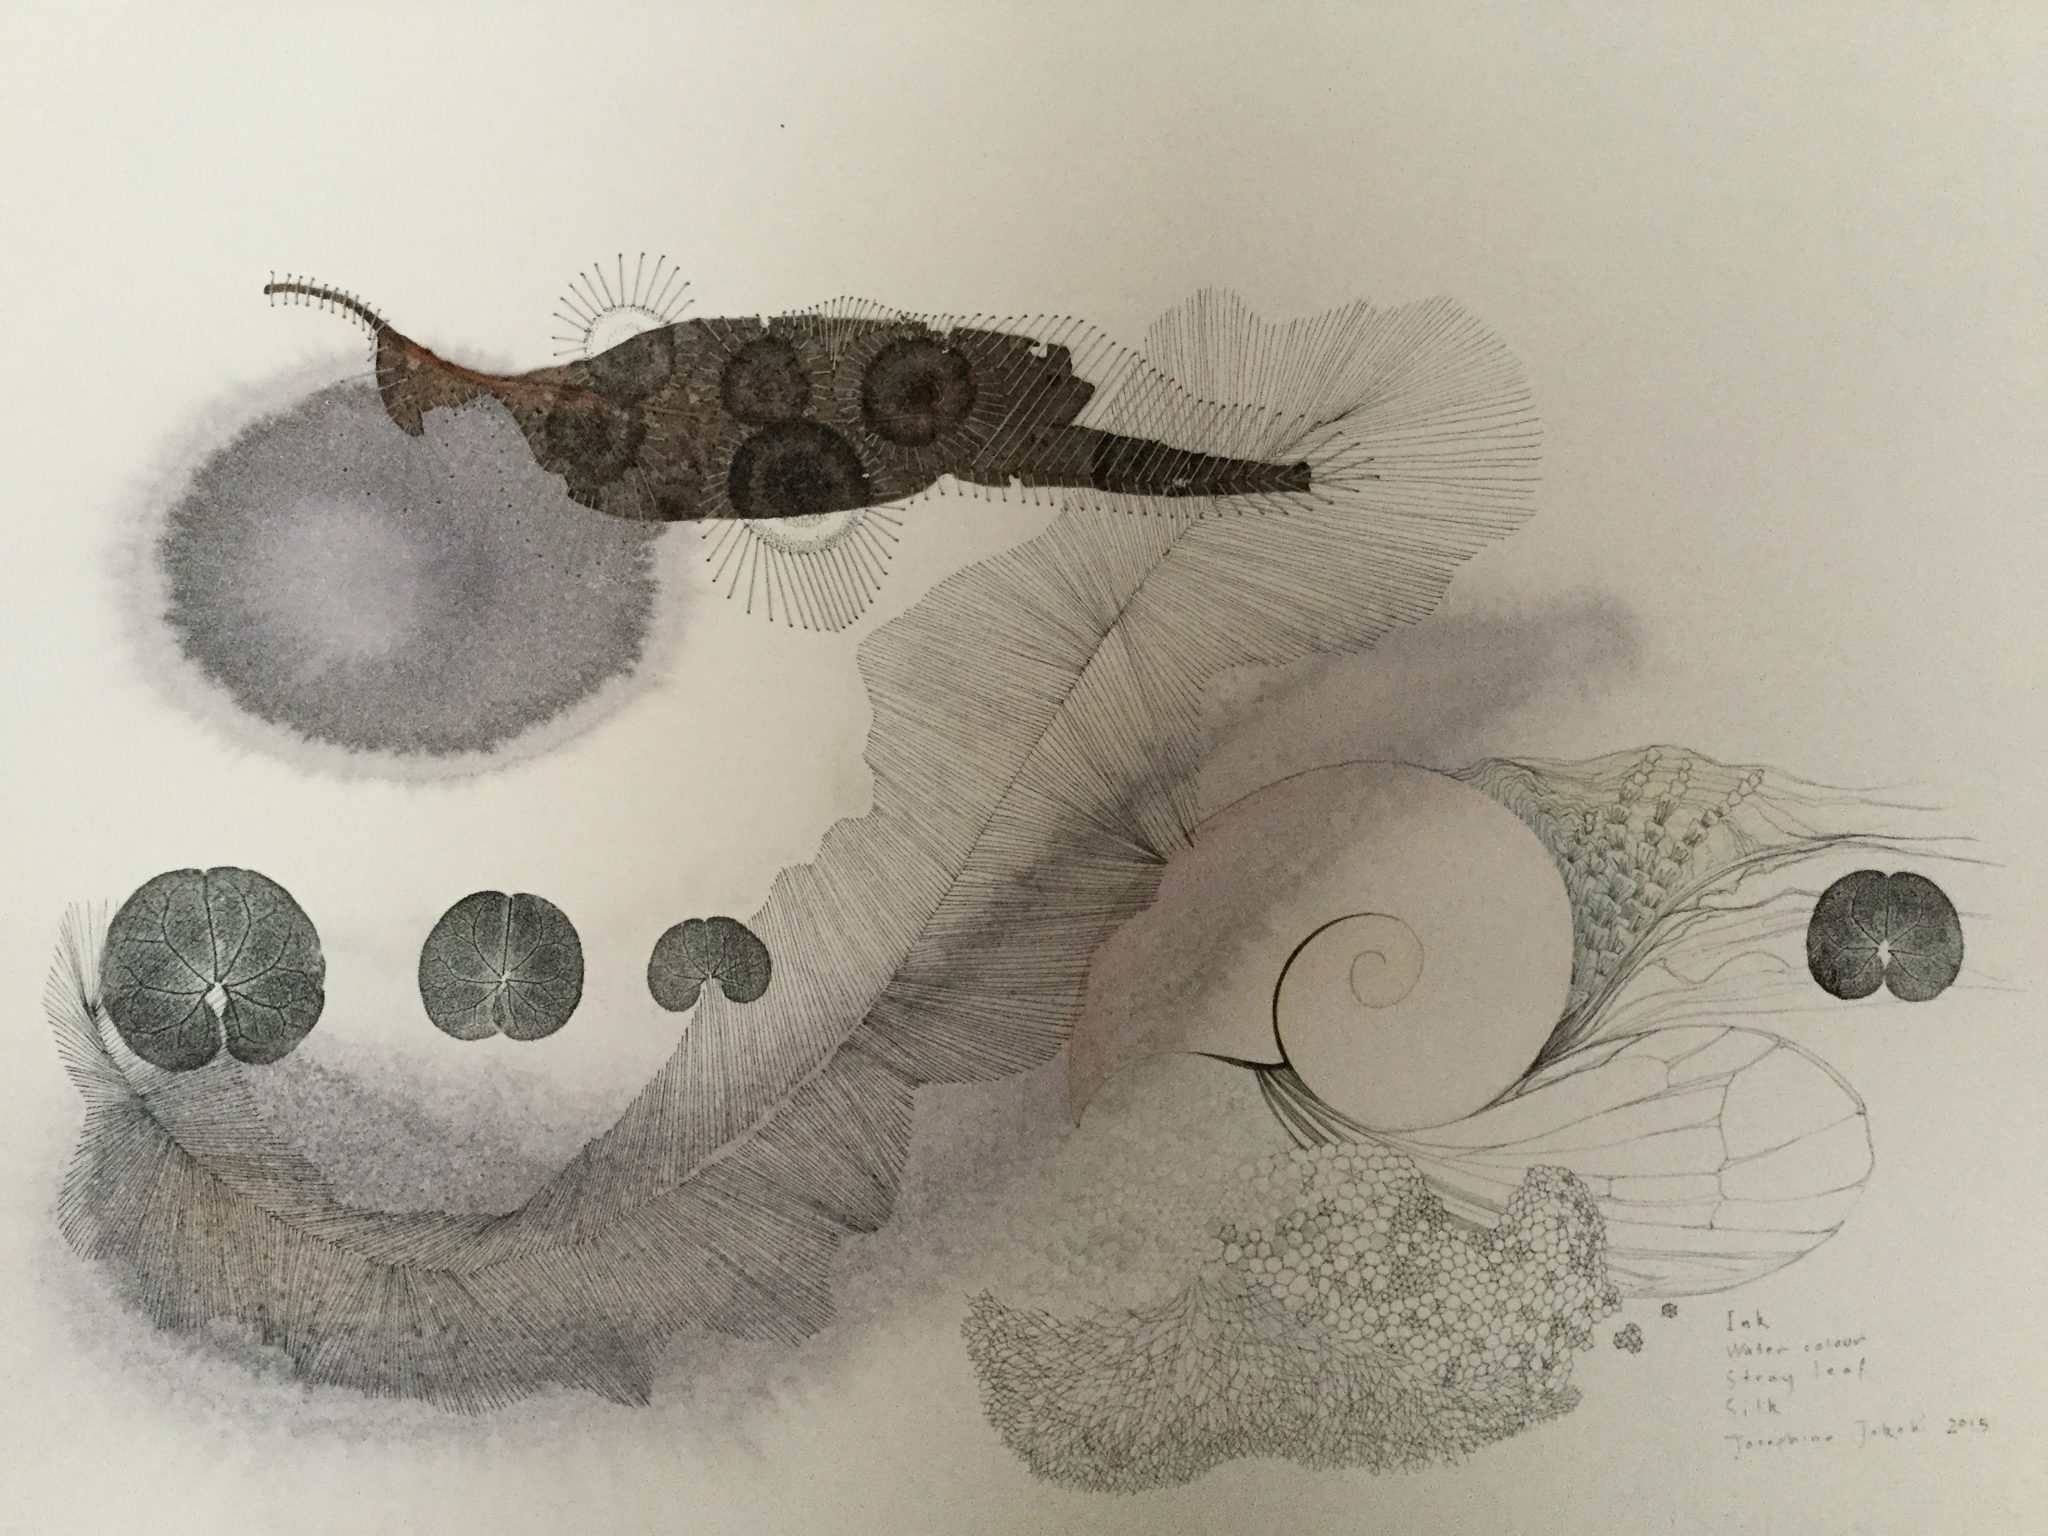 Josephine Jakobi, Fringe Dwellers, 2015, Ink, watercolour, leaf, silk, 32 x 46 cm image, 52 x 65 cm inc. frame, Collection of Phil Evans.